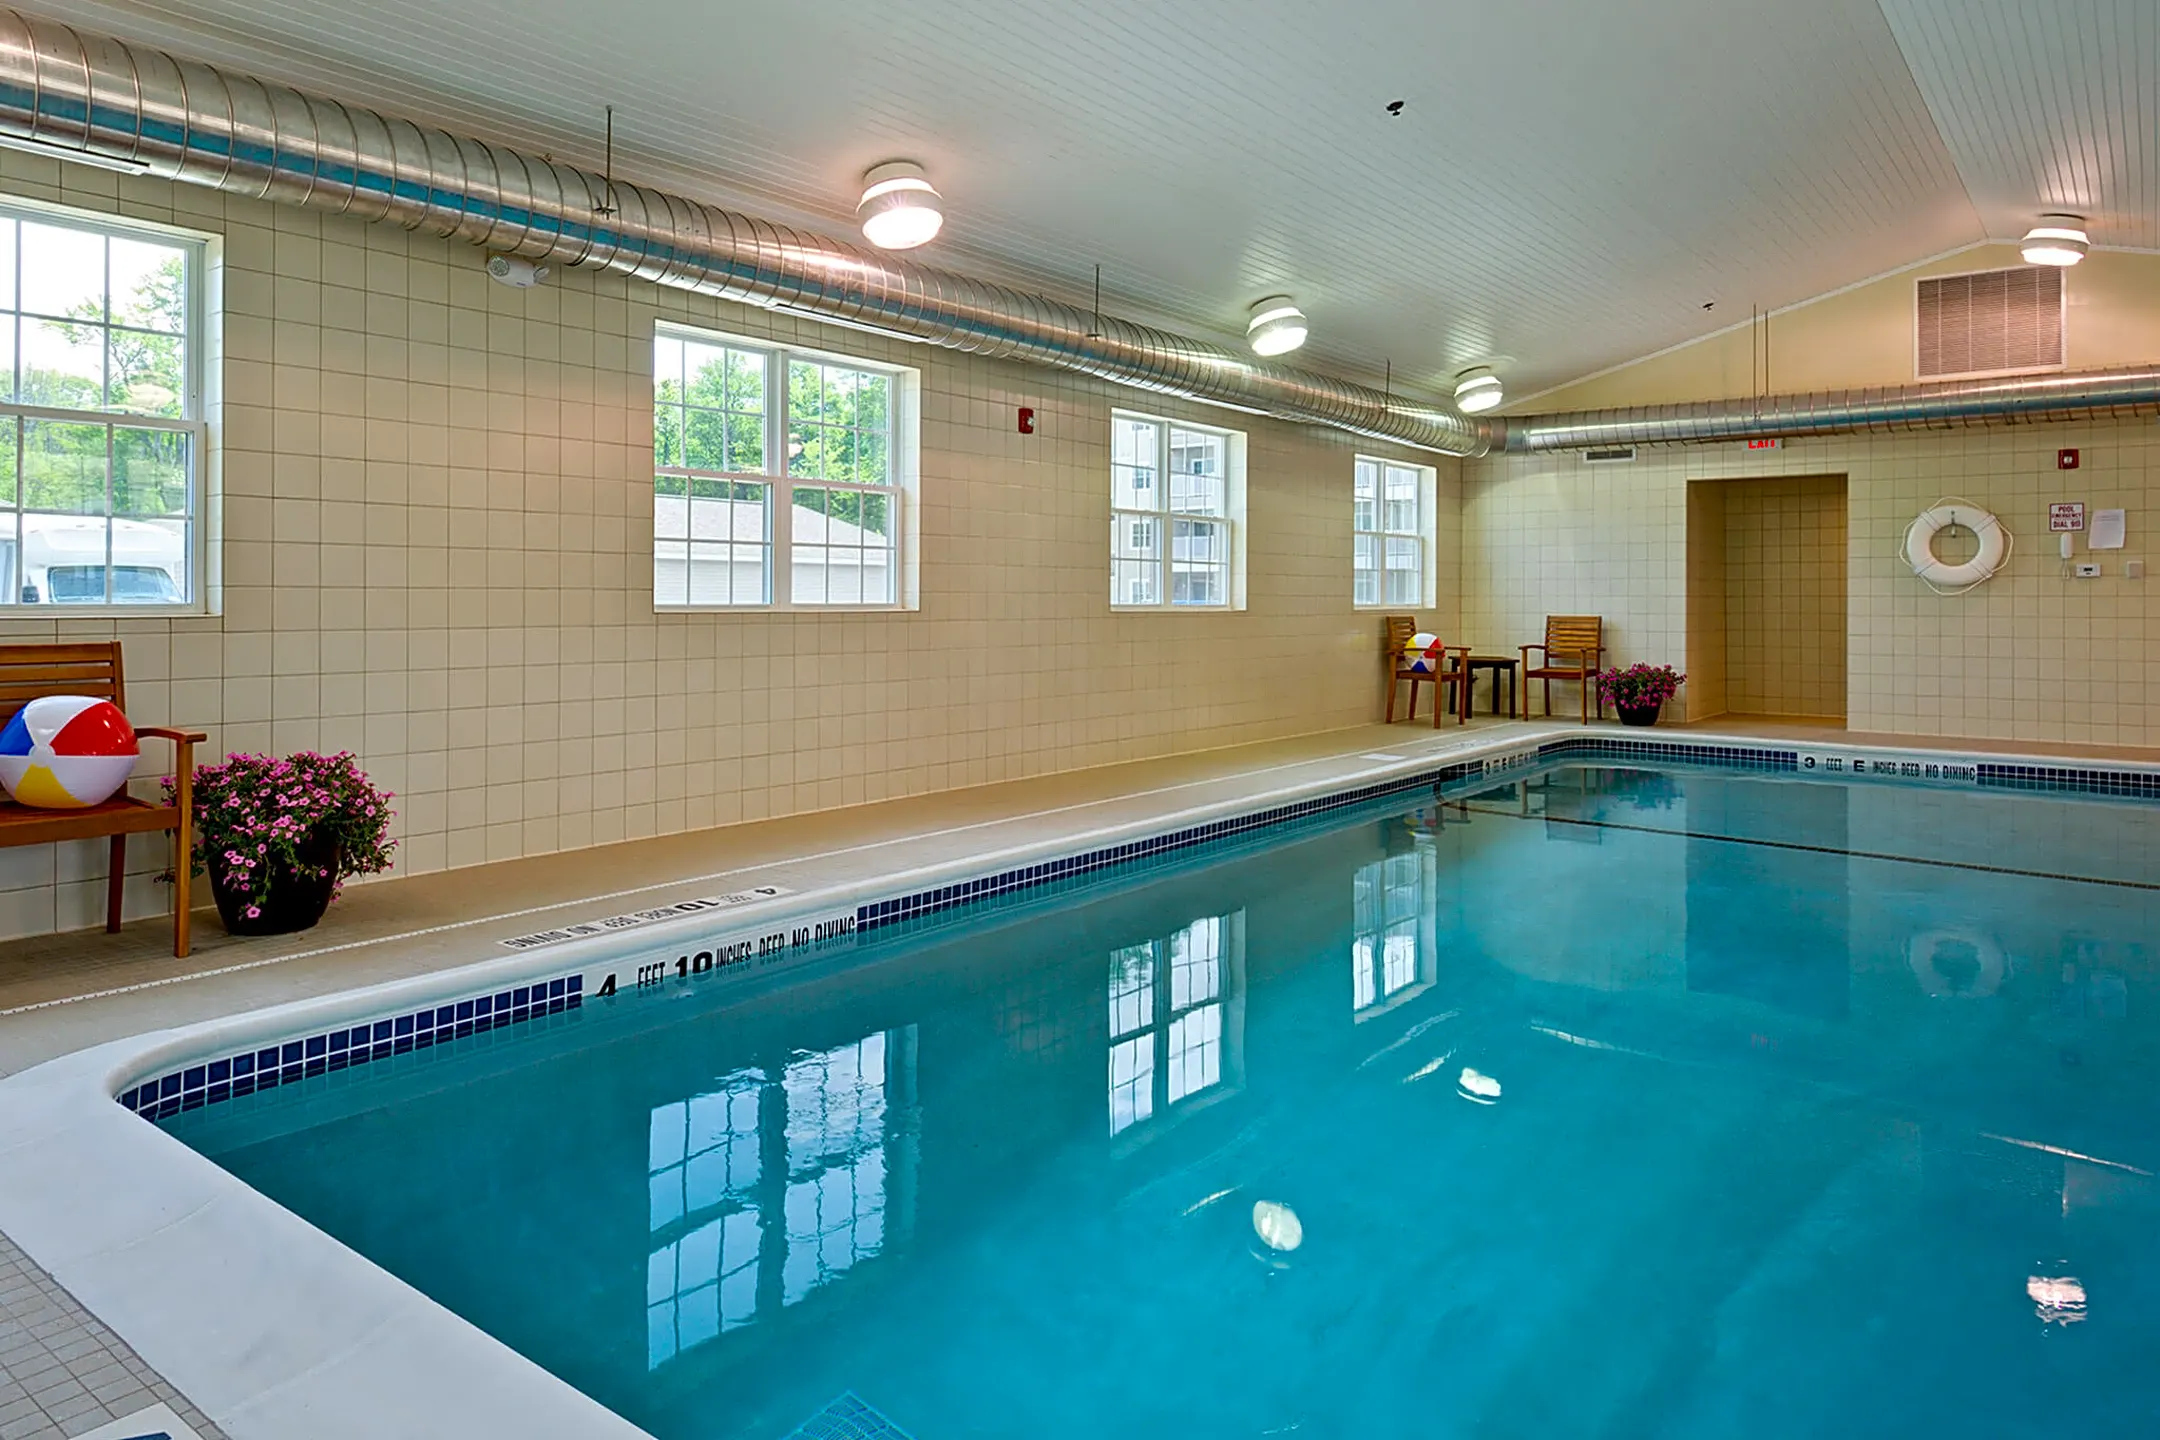 Pool - Glenmont Abbey Village - 55+ Living - Glenmont, NY